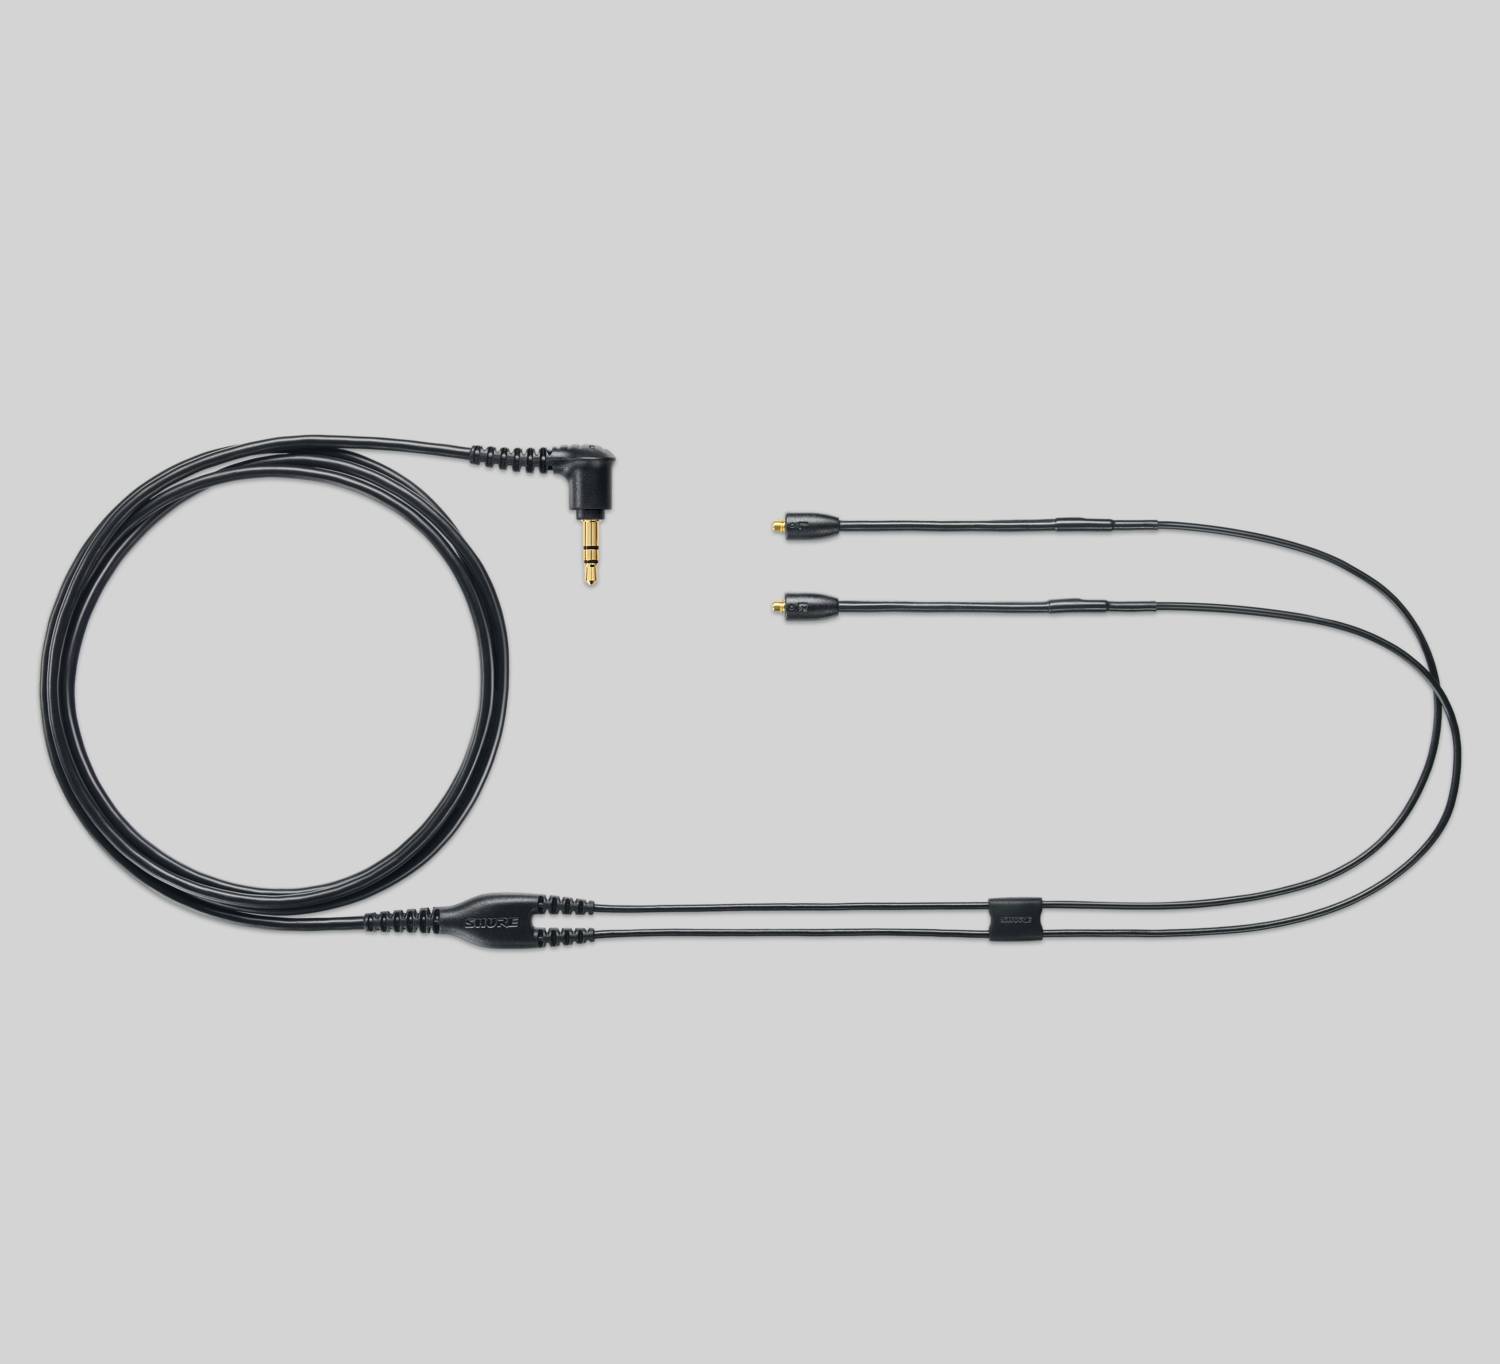 SE535 120cm Schwarz Audio AUX Kabel 3,5mm Klinke für Shure SE215 SE315 SE425